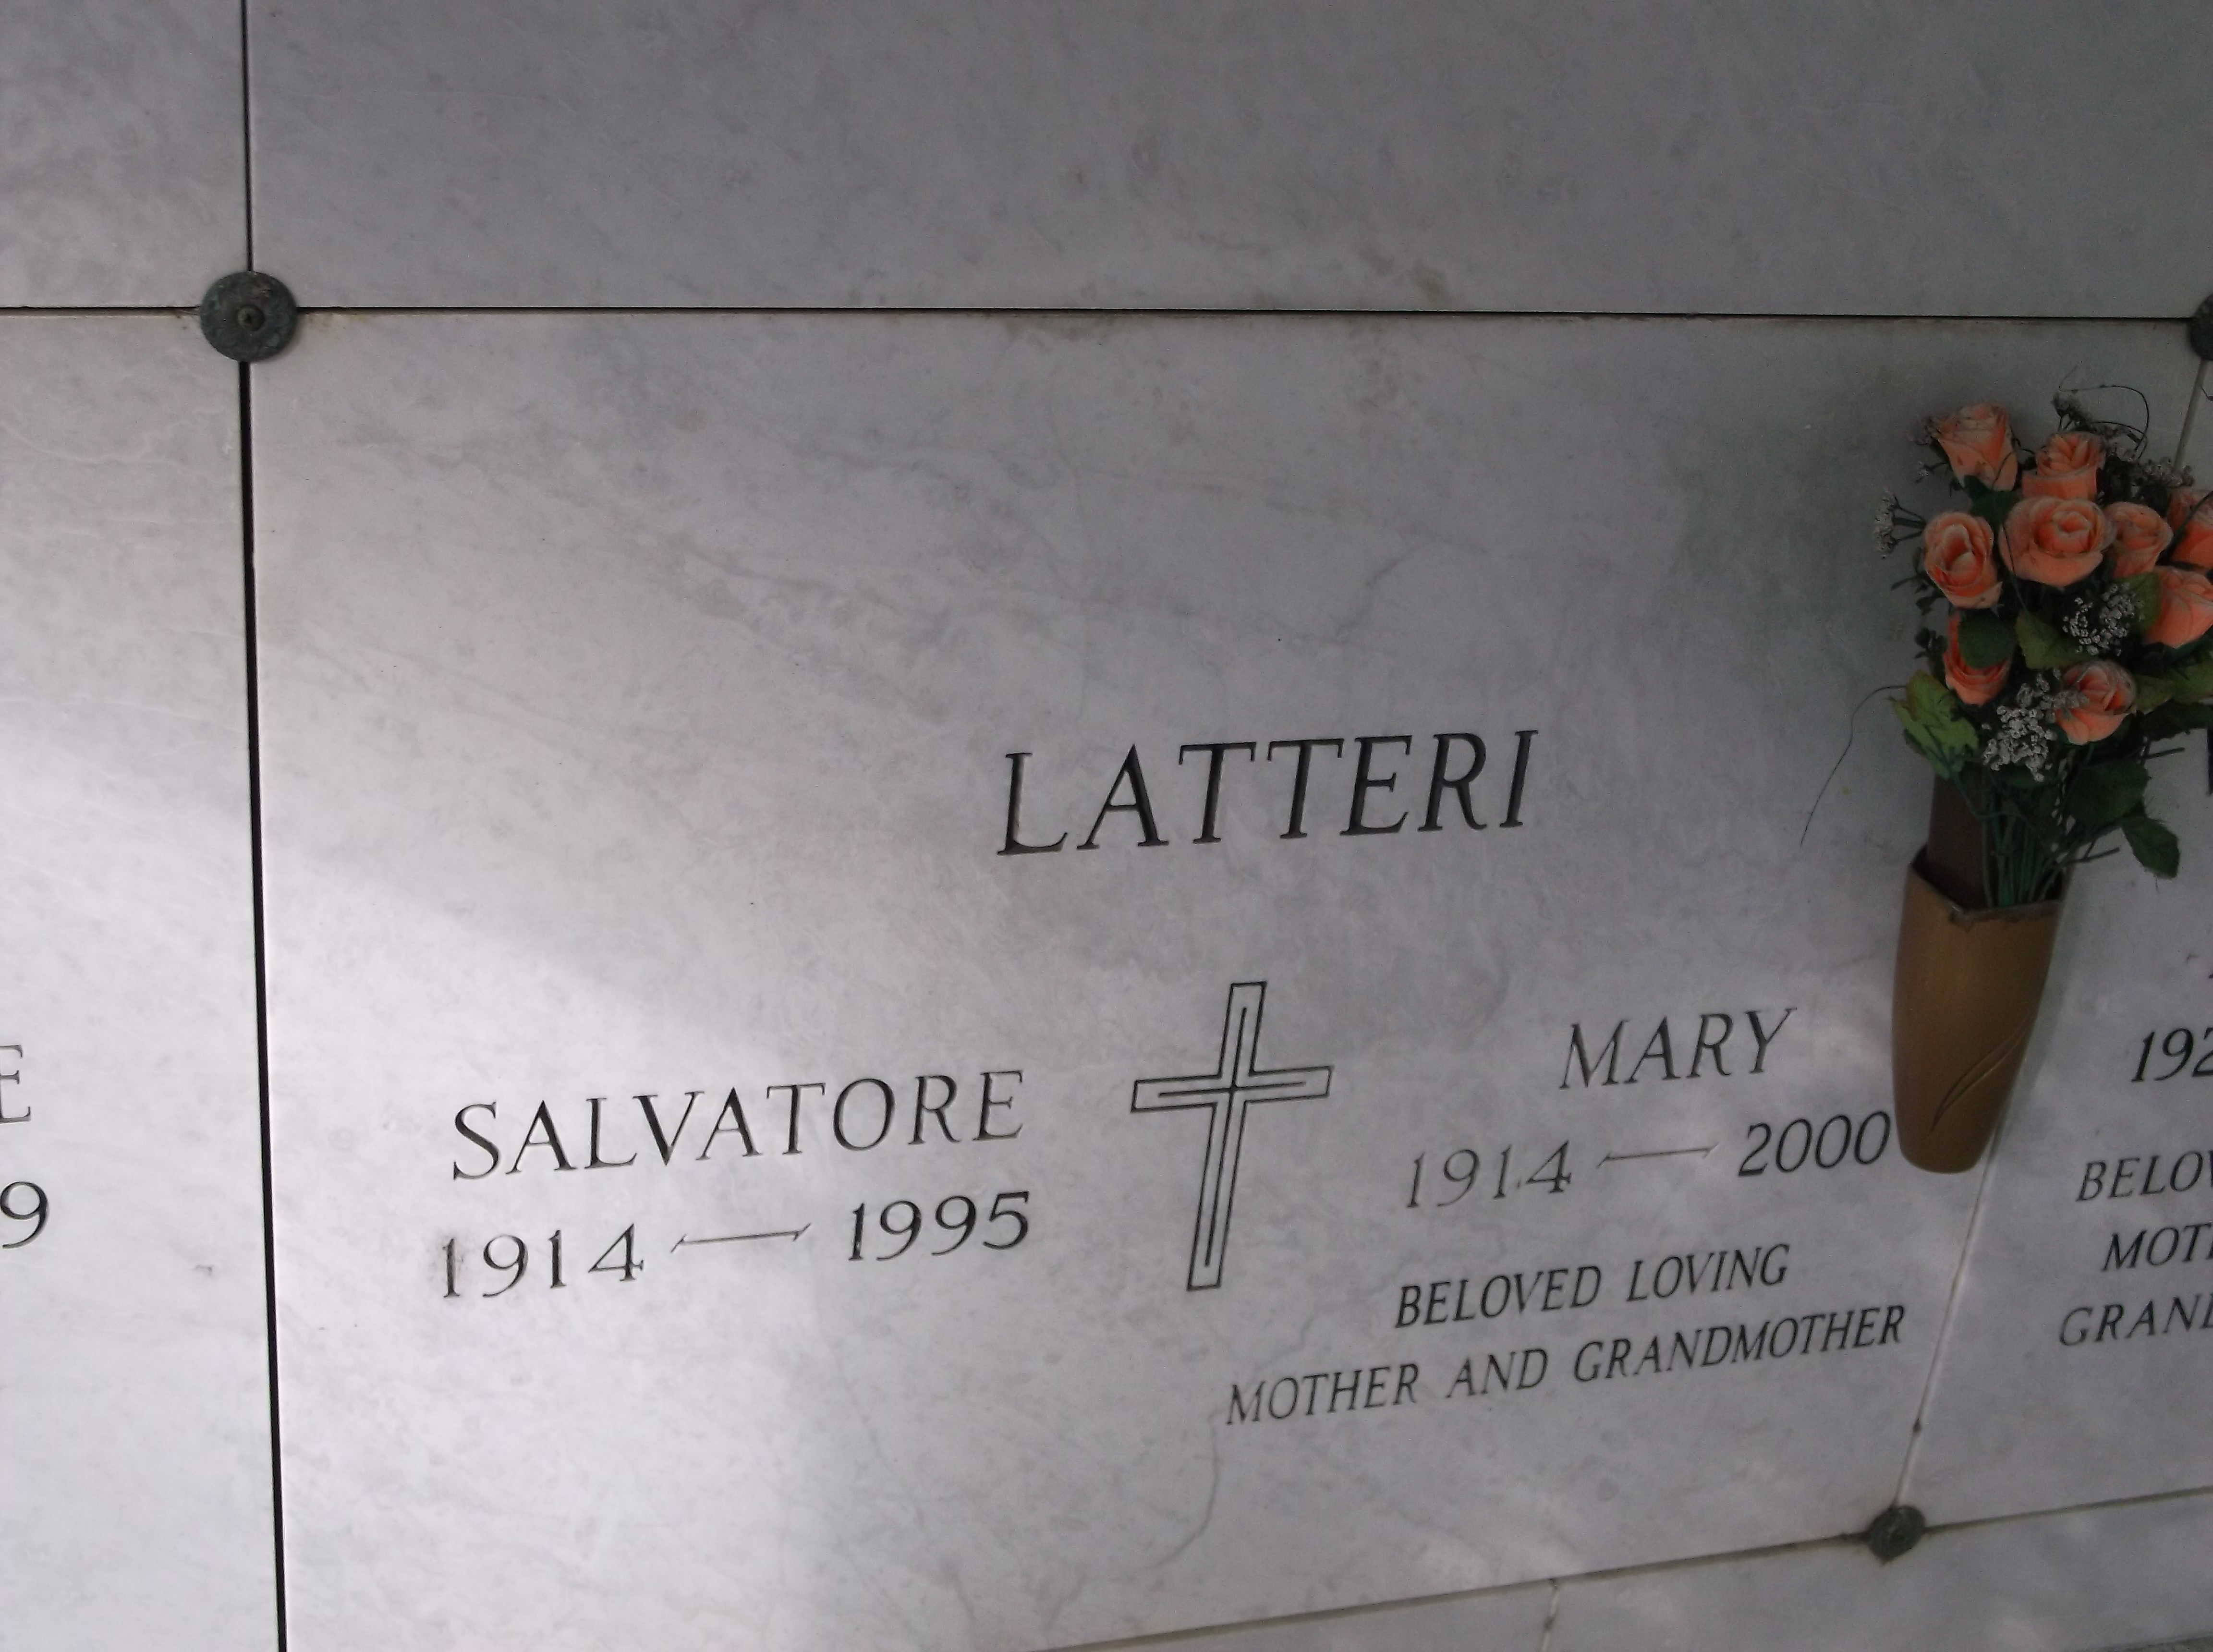 Salvatore Latteri